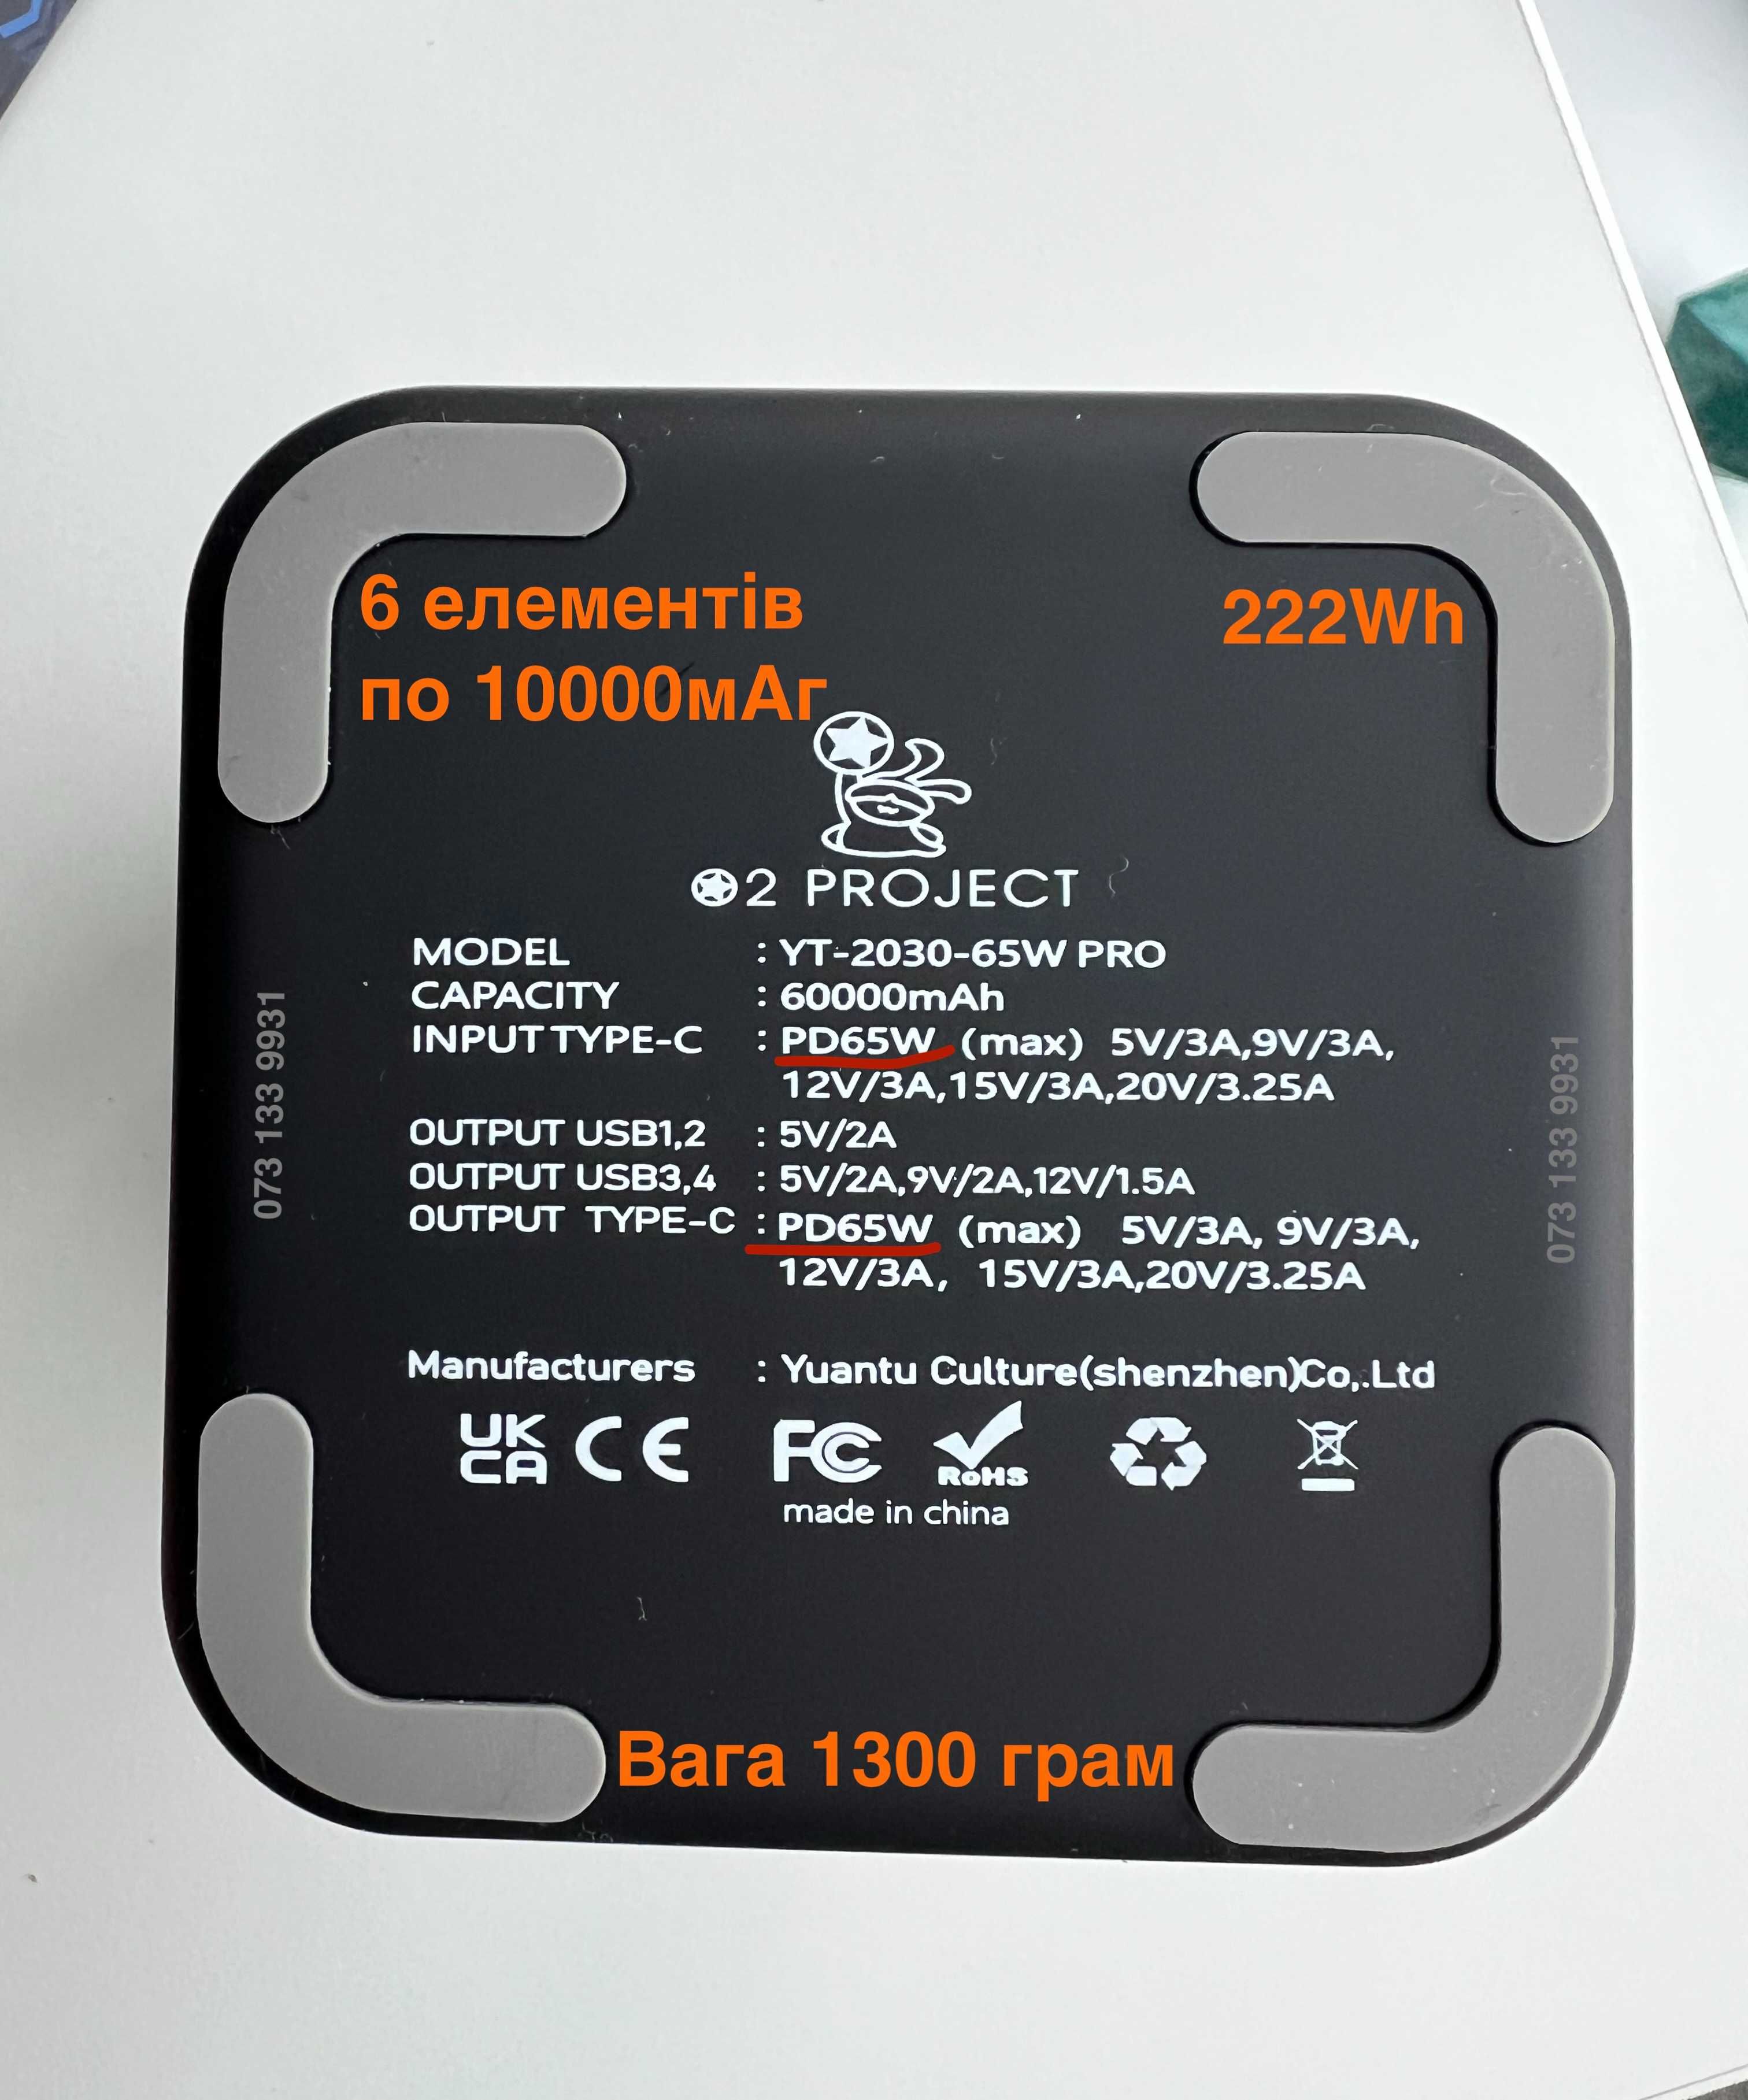 60000mAh 200Wh PD65W 2хUSB-C павербанк для ноутбука O2Project PRO